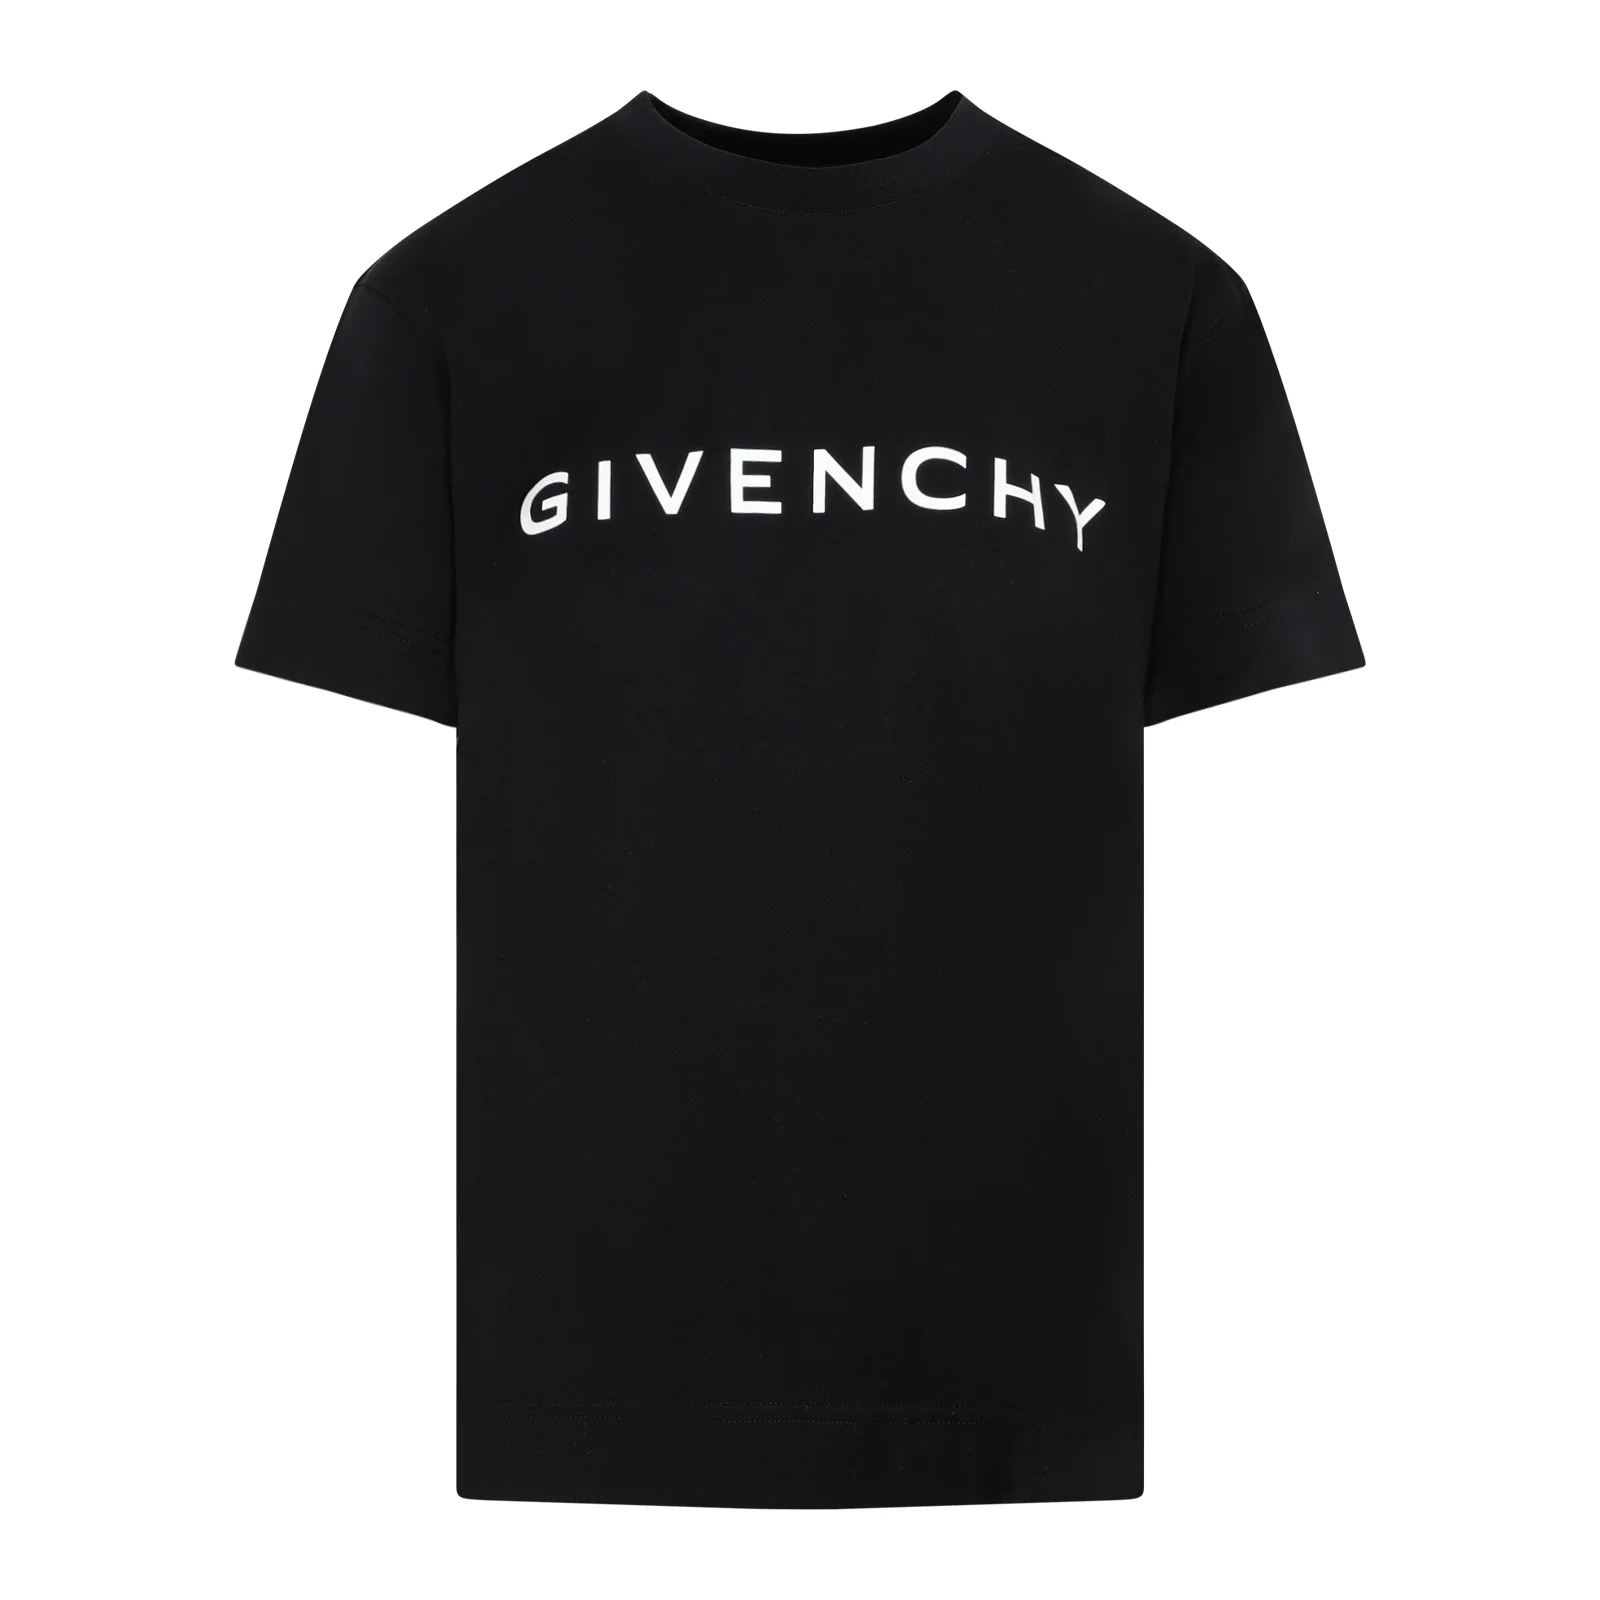 Givenchy Logo T-Shirt Black